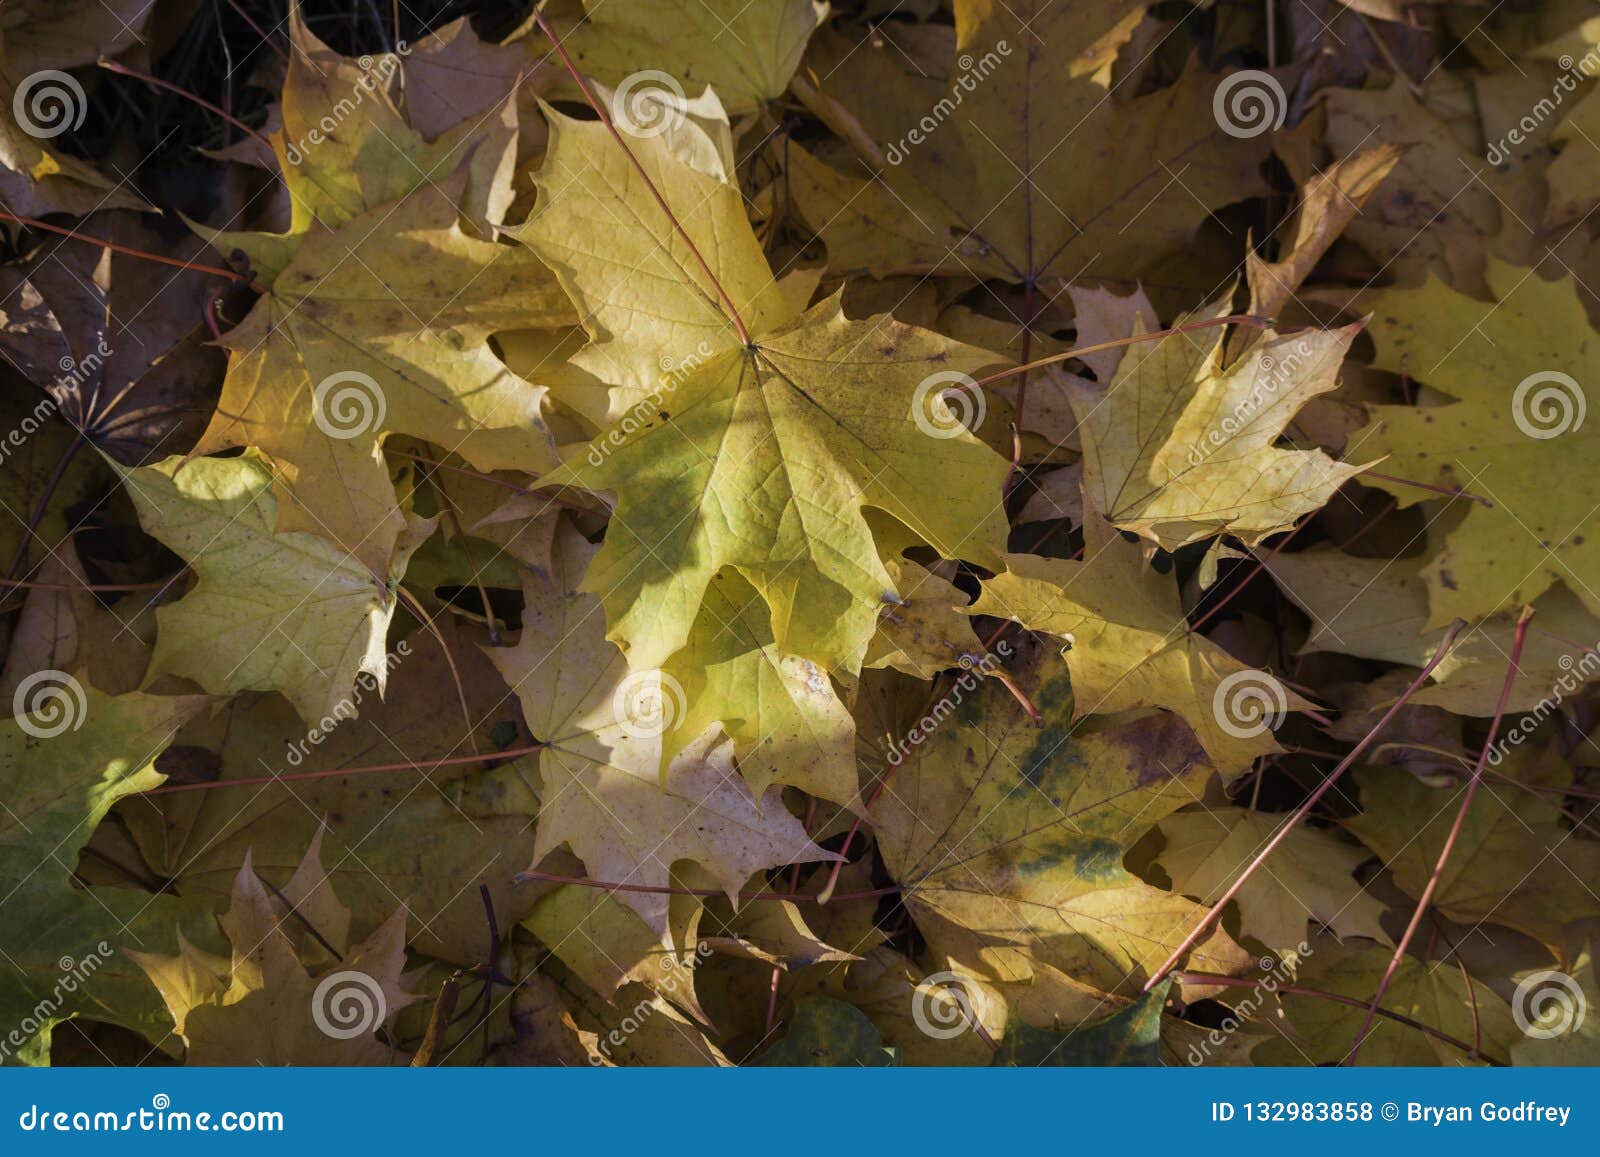 leaves in tree august falling maple